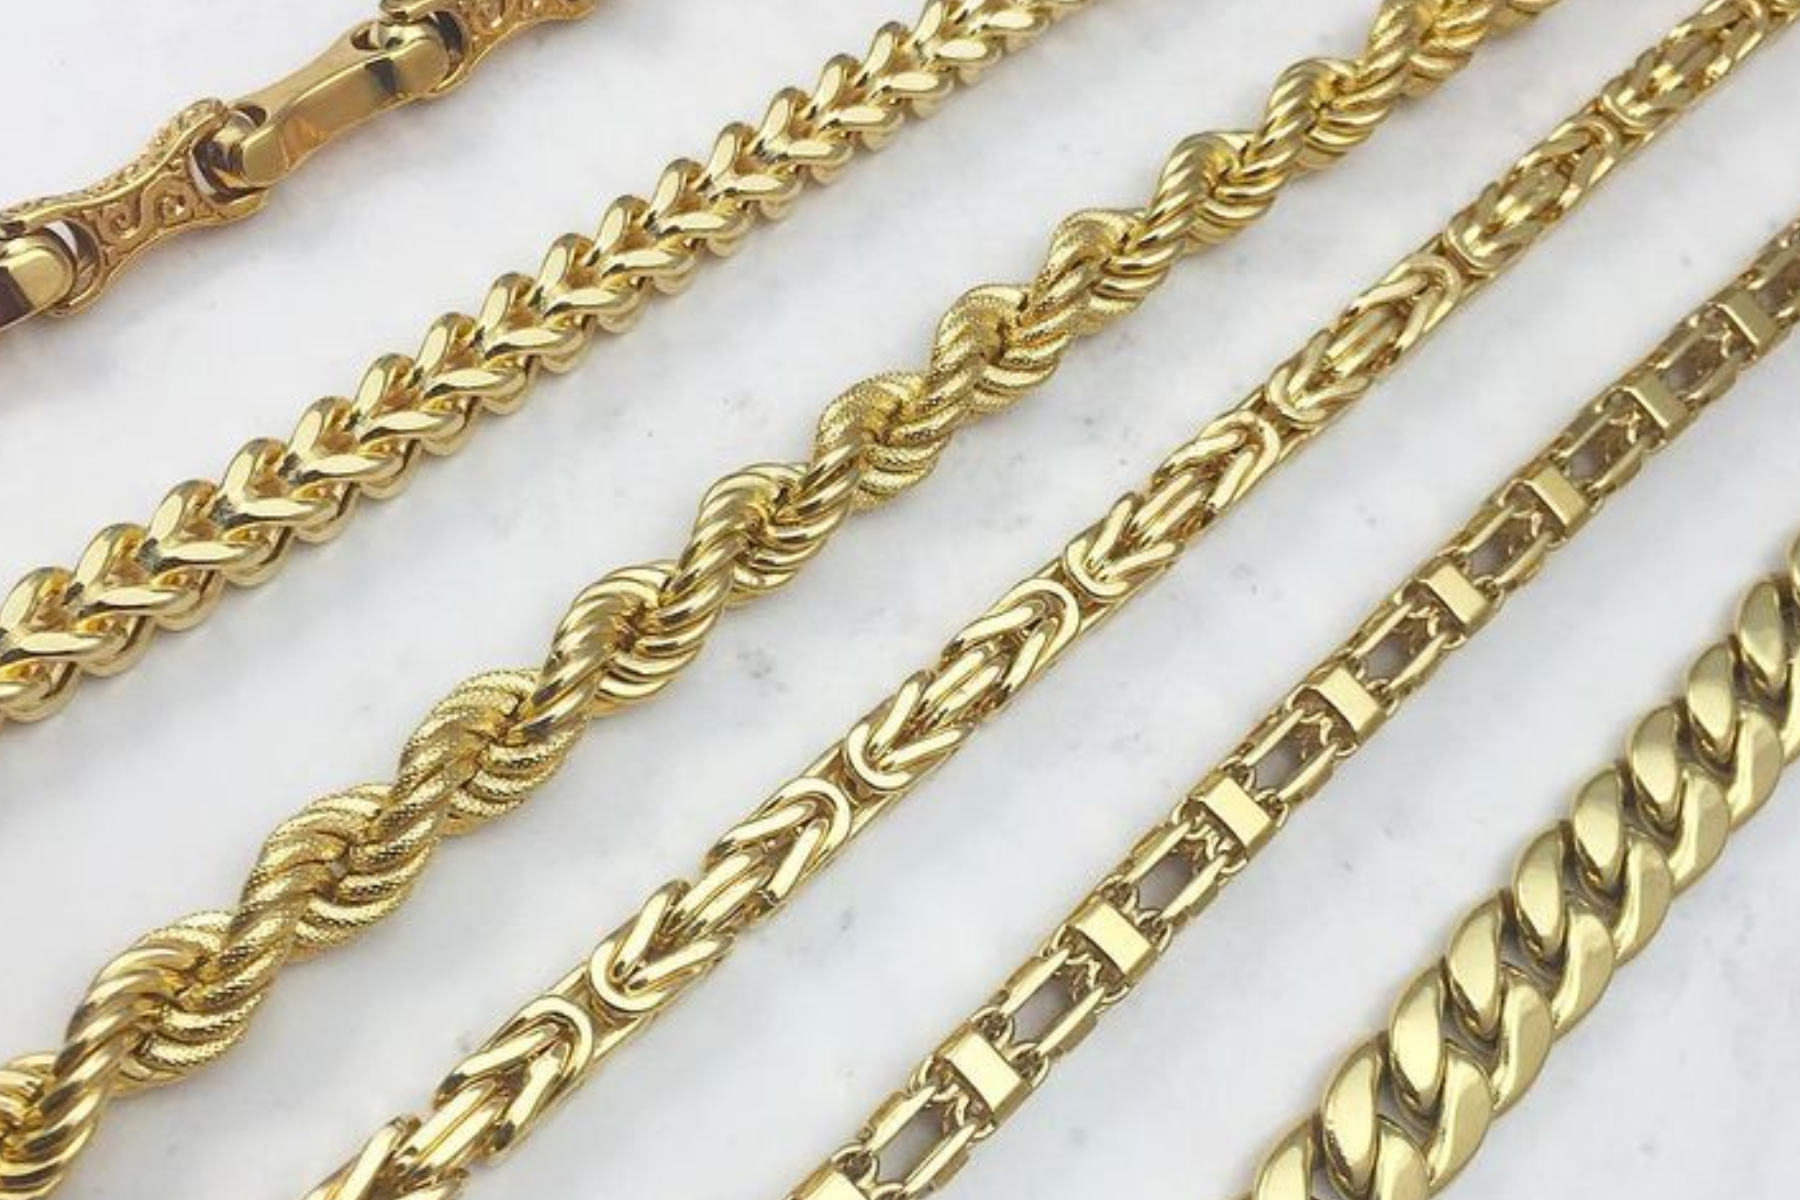 Six distinct gold necklace chains